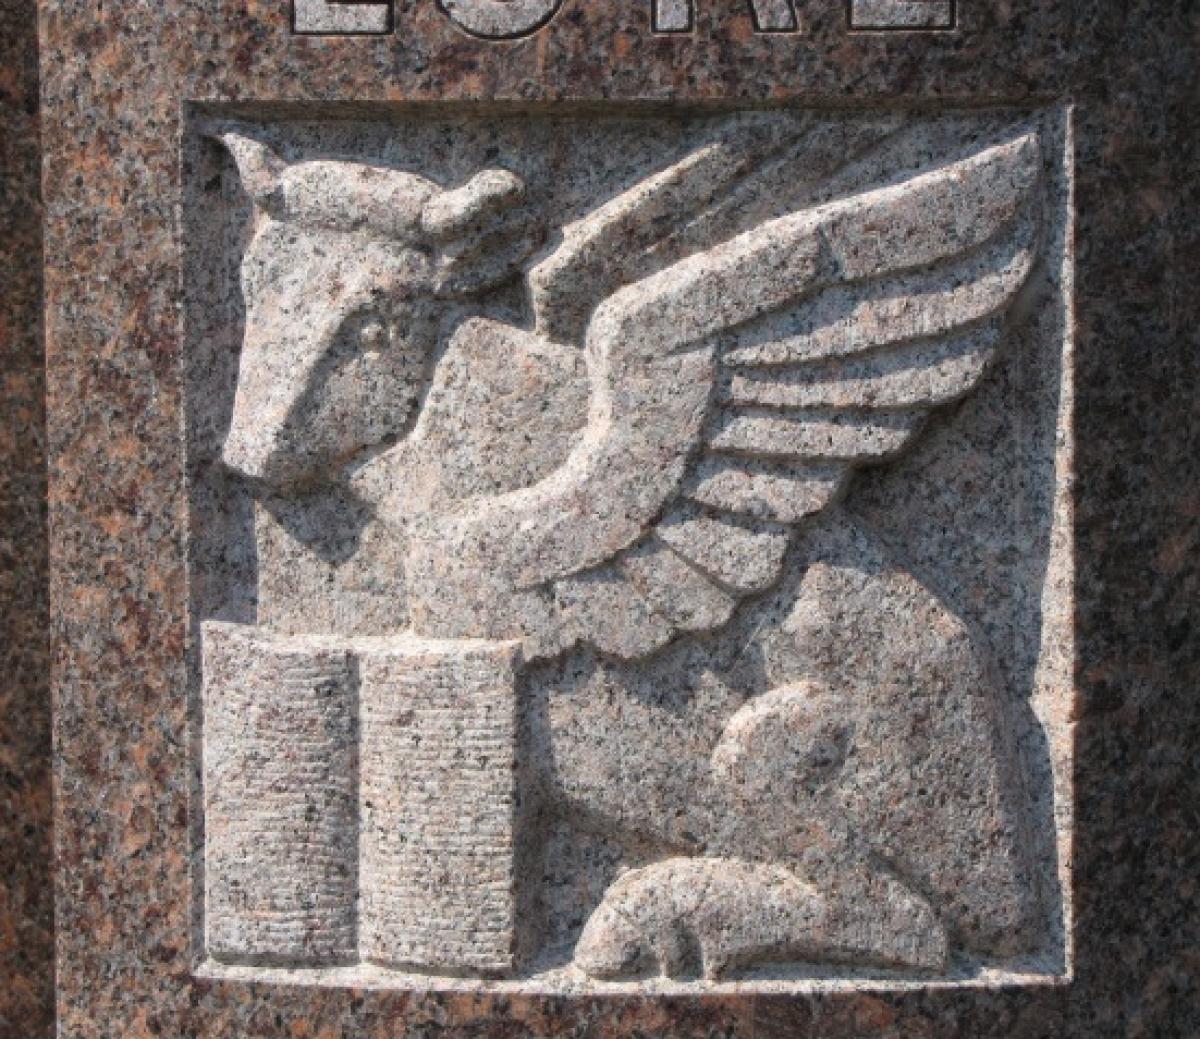 OK, Grove, Headstone Symbols and Meanings, Winged Ox (Saint Luke)